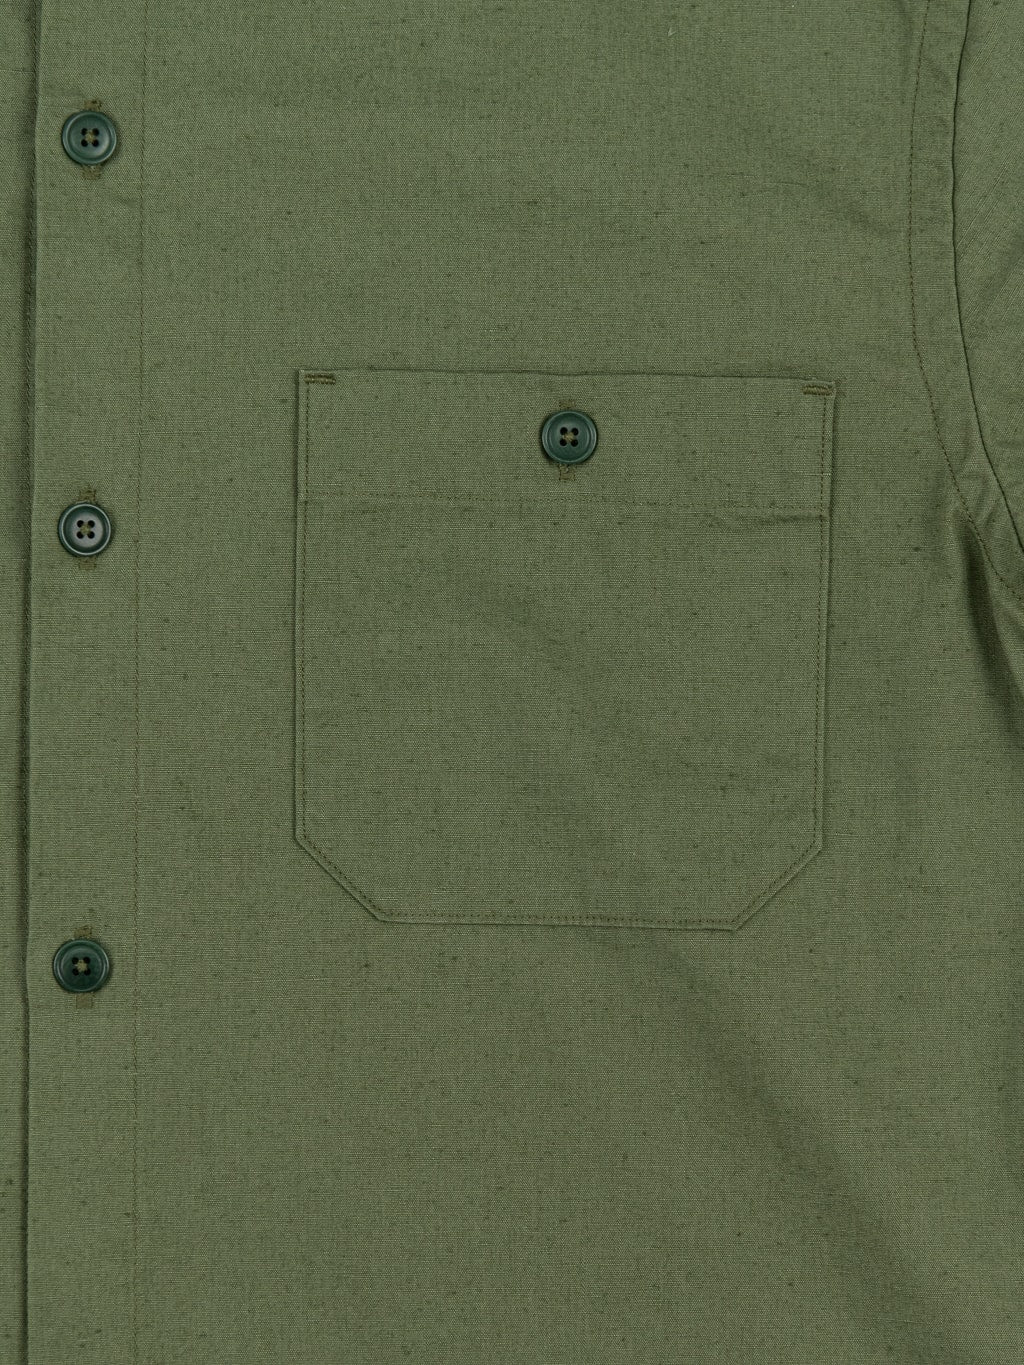 ues denim mechanic shirt sleeves shirt sage green pocket closeup